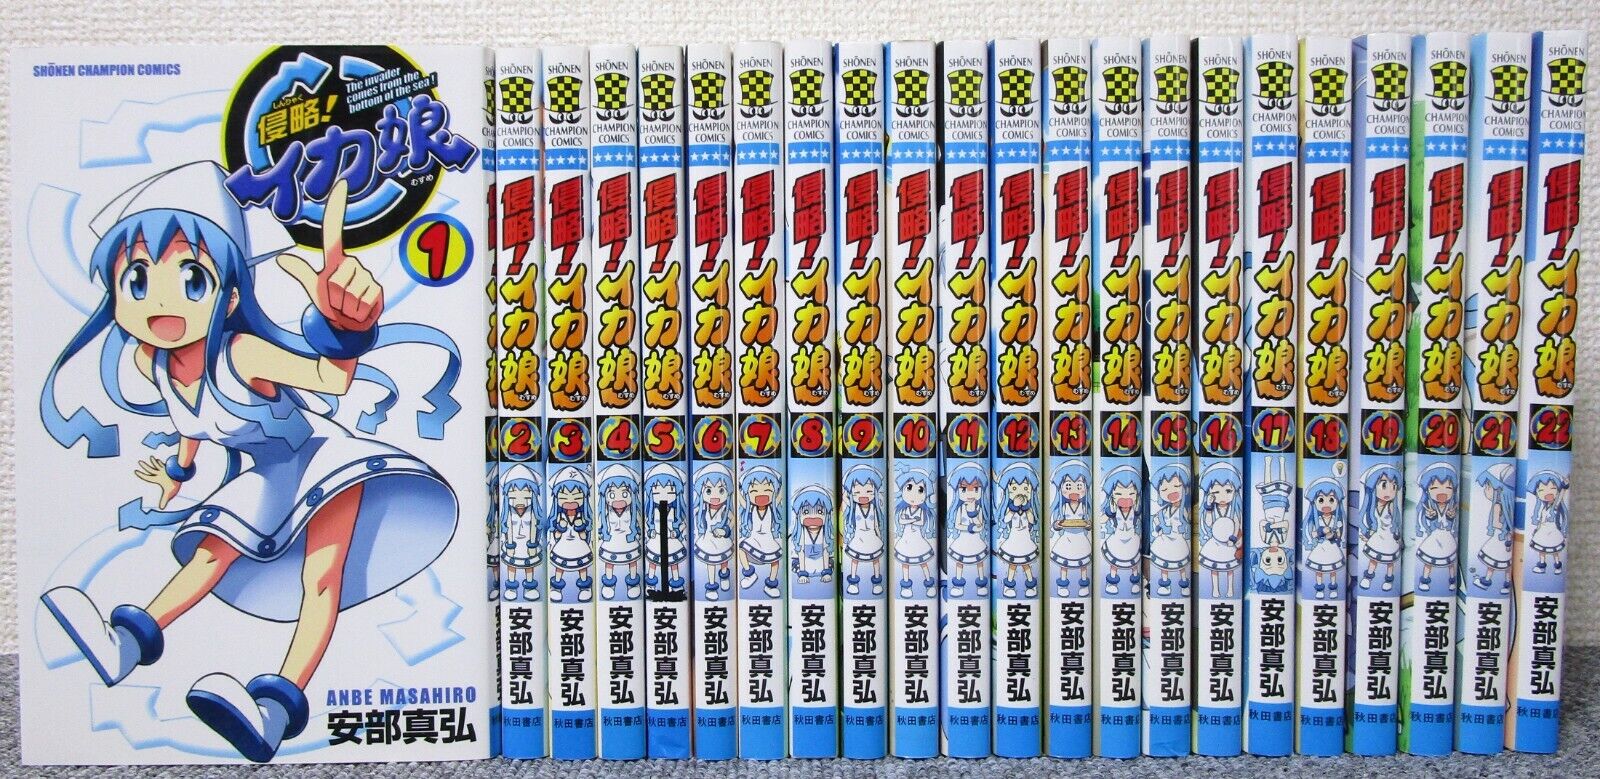 Squid Girl - Shinryaku Ika Musume Vol.1-22 Complete Comics Set Japanese Ver